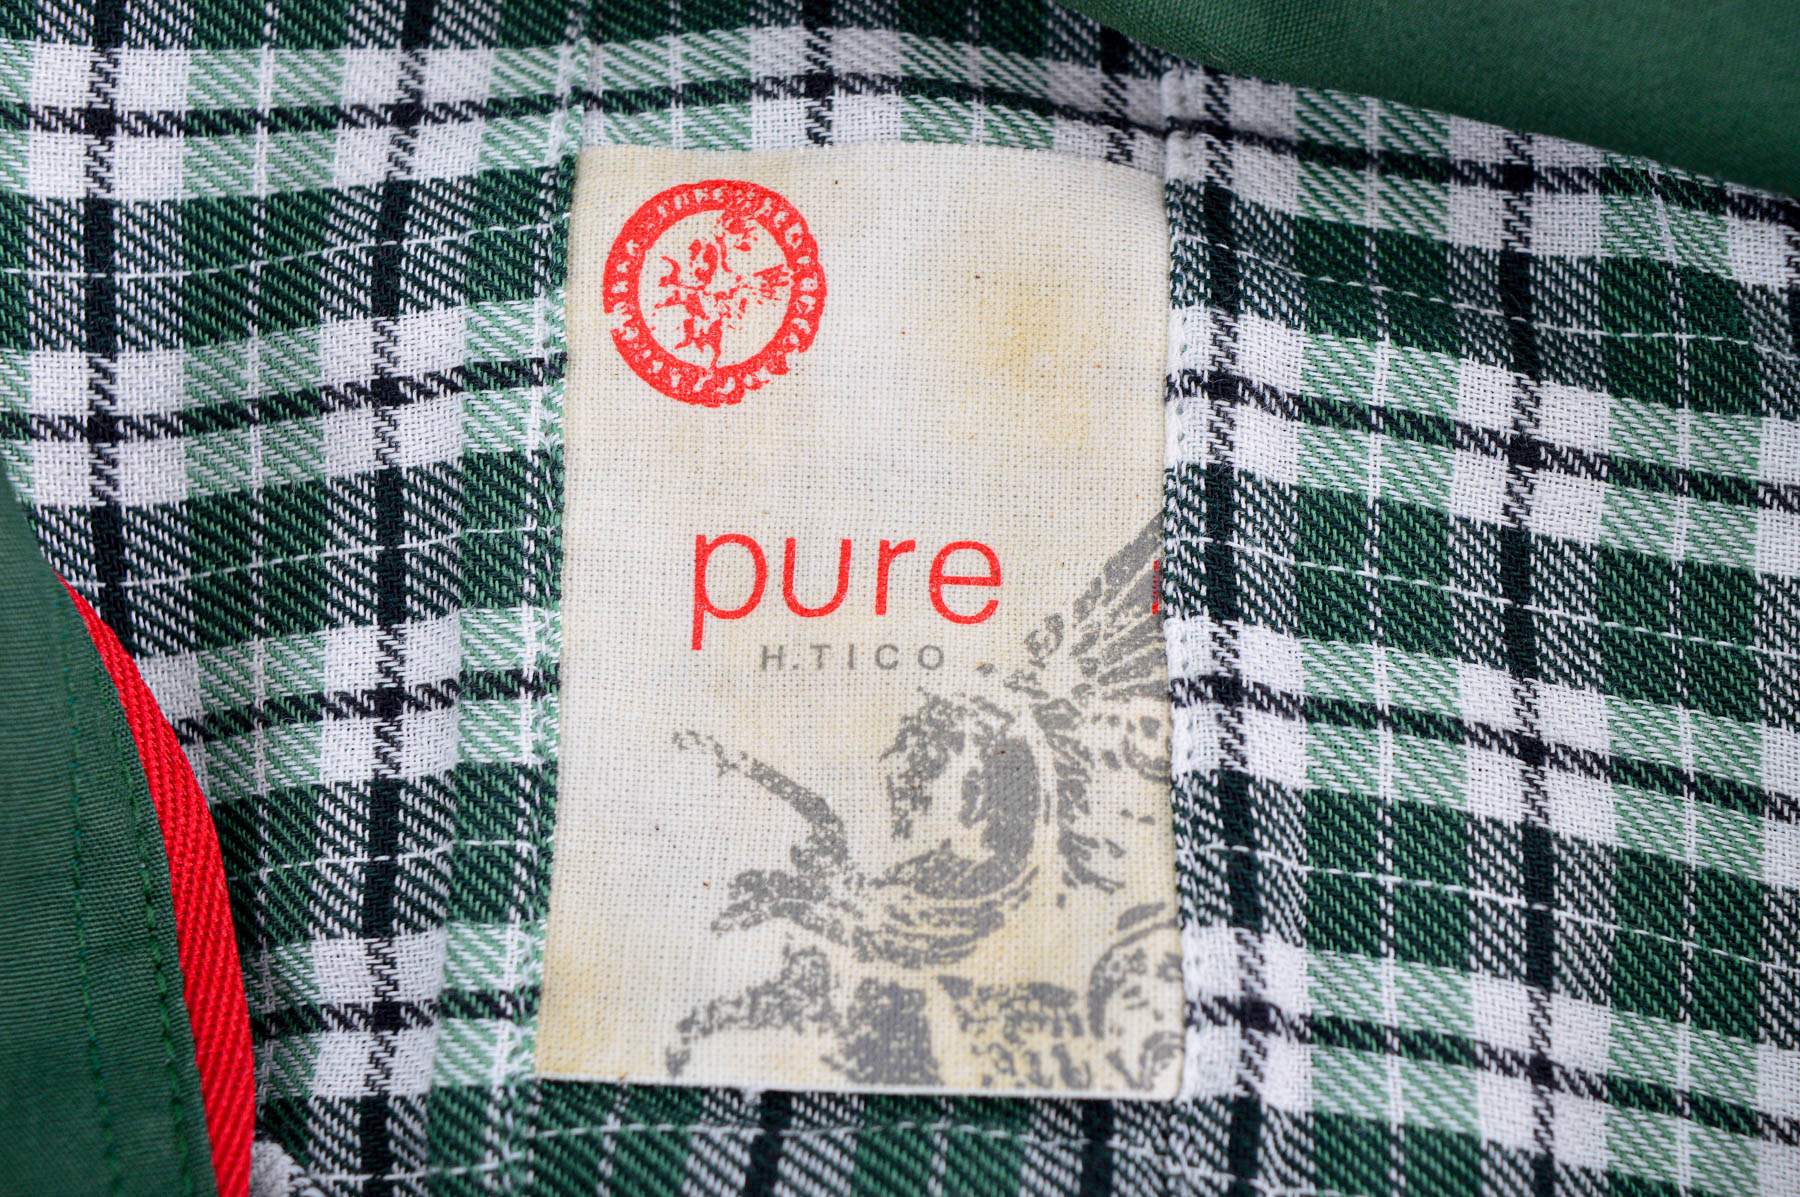 Męska koszula - Pure by H.TICO - 2